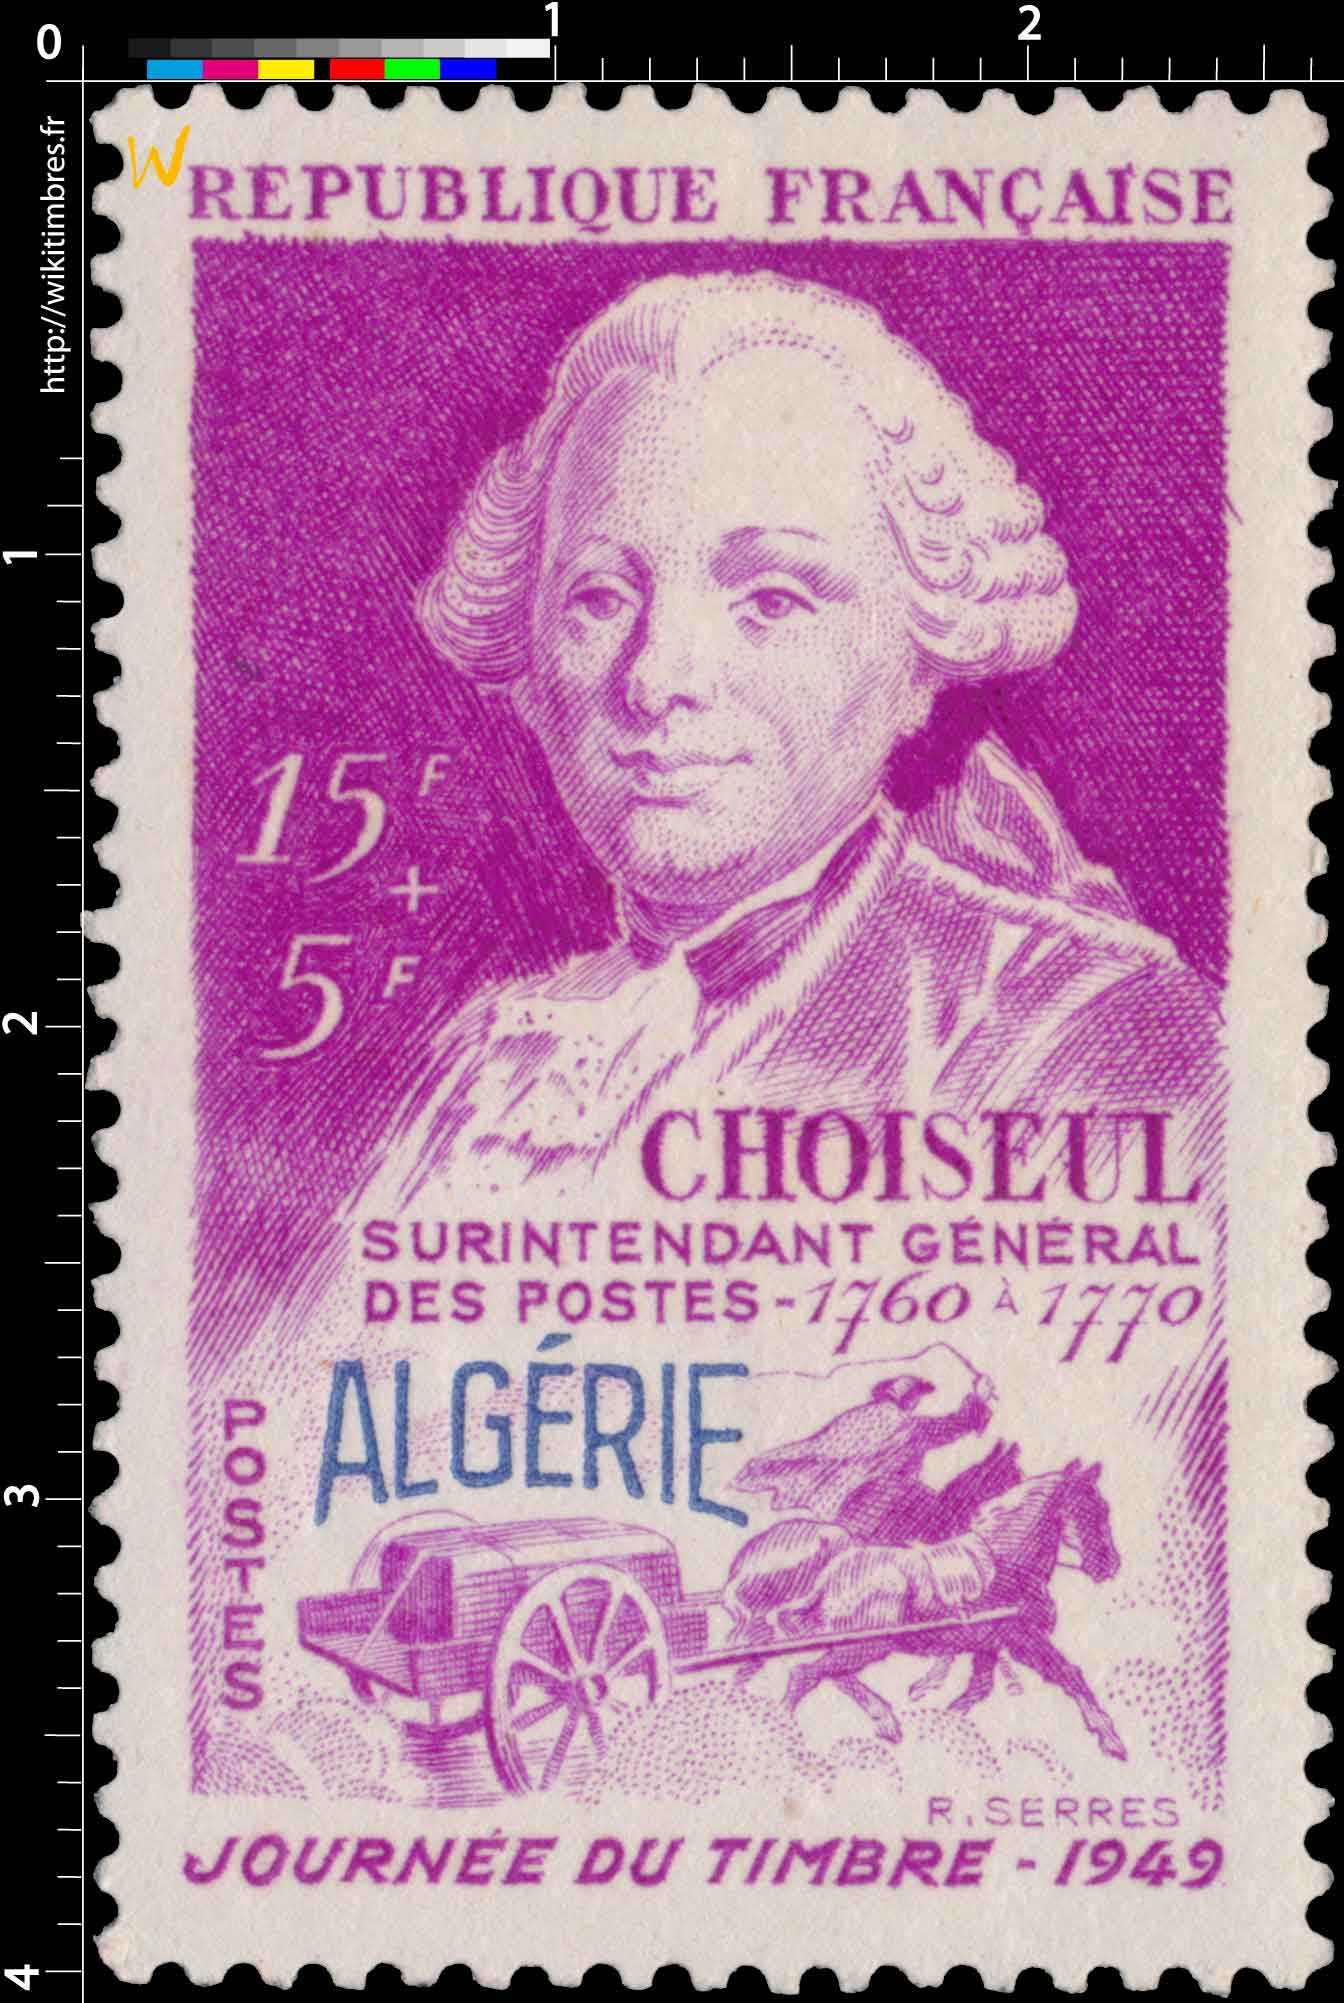 Algérie - Choiseul